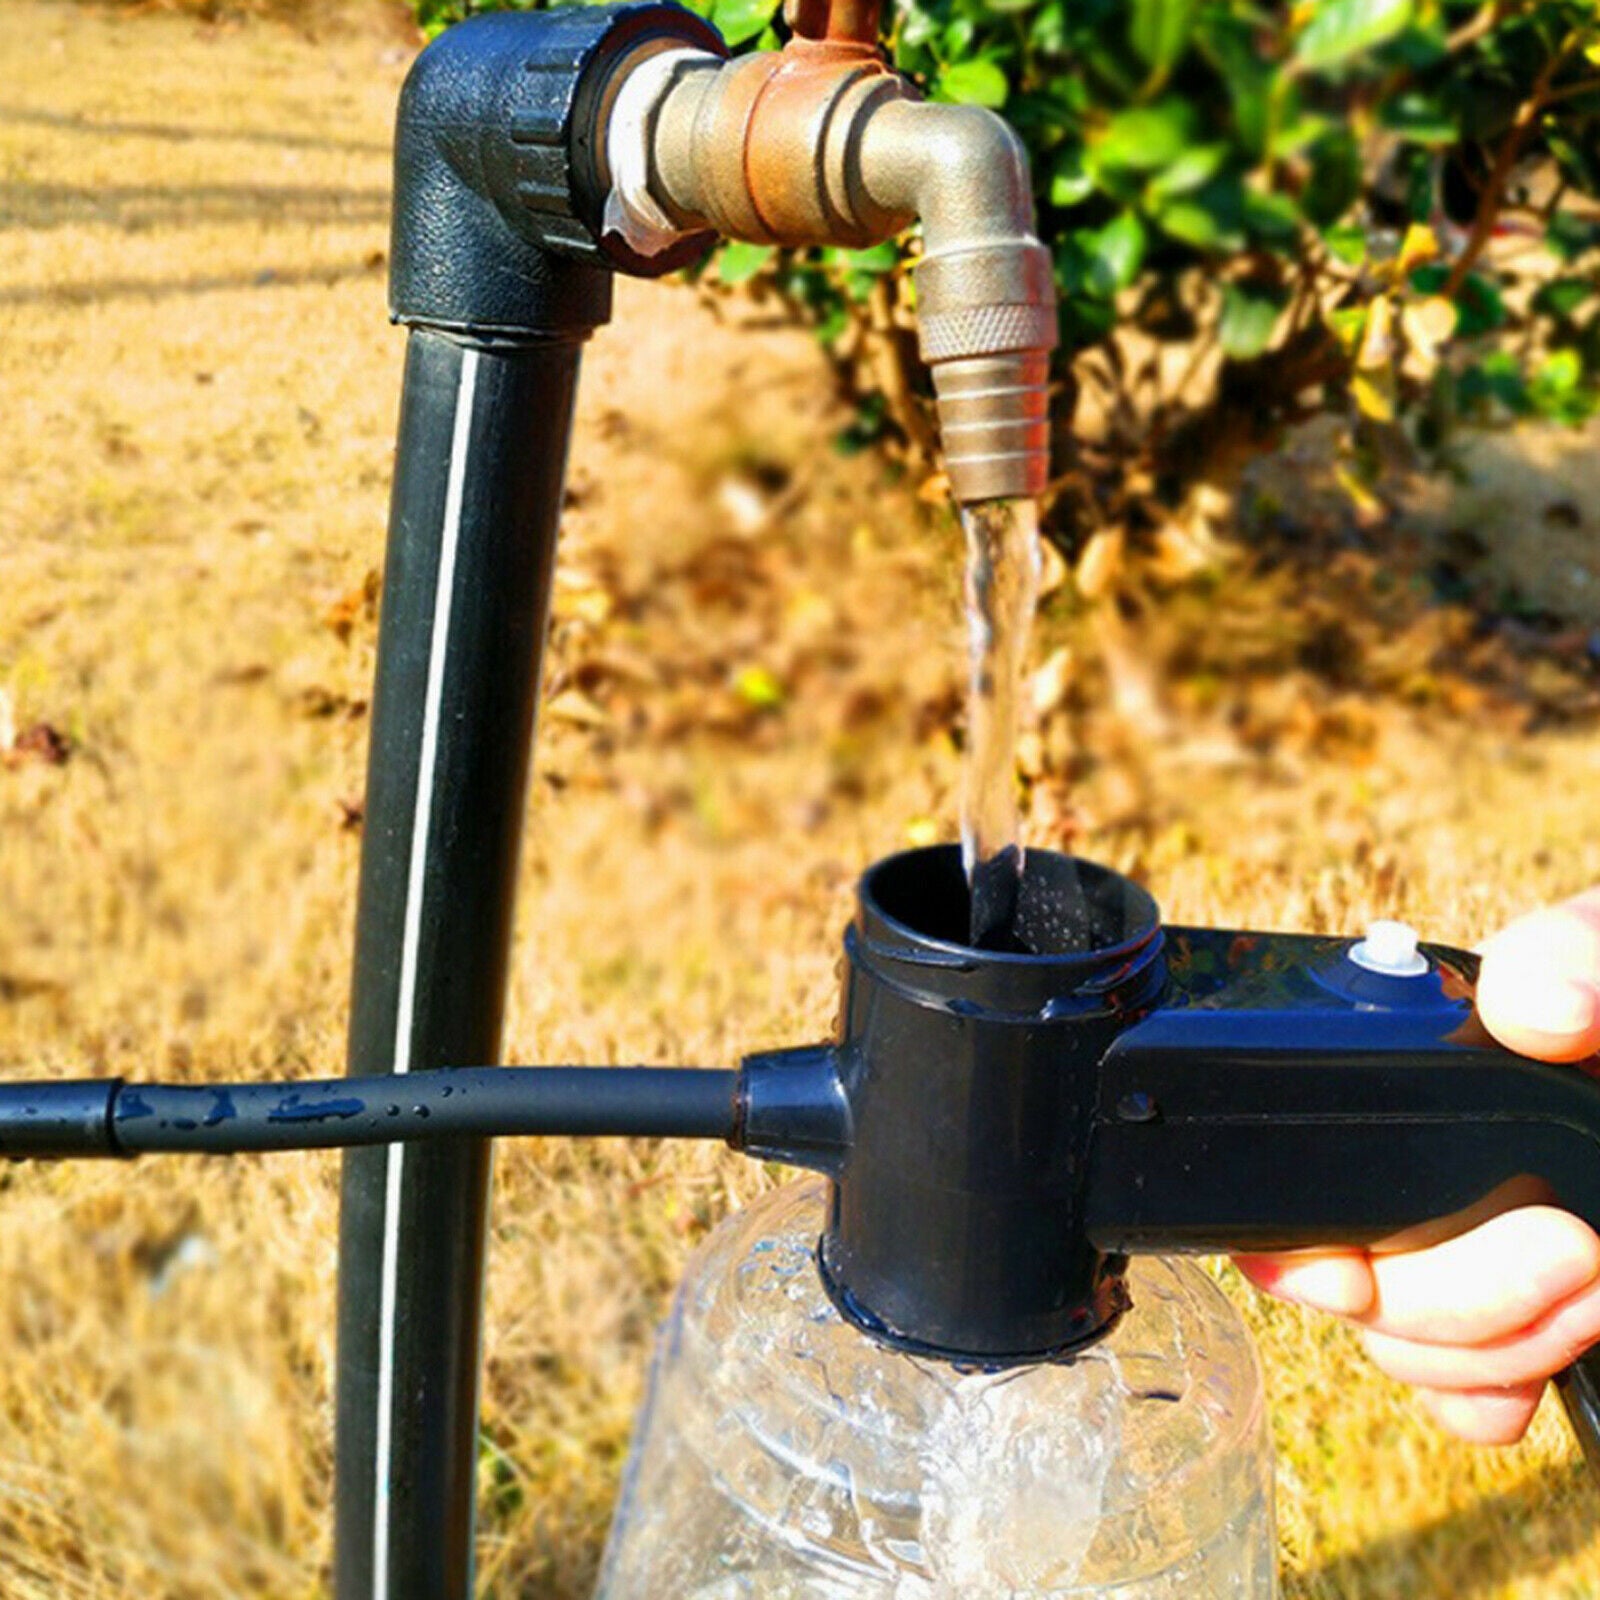 2500ml Electric Automatic Garden Sprayer Water Spray Bottle Watering Pot